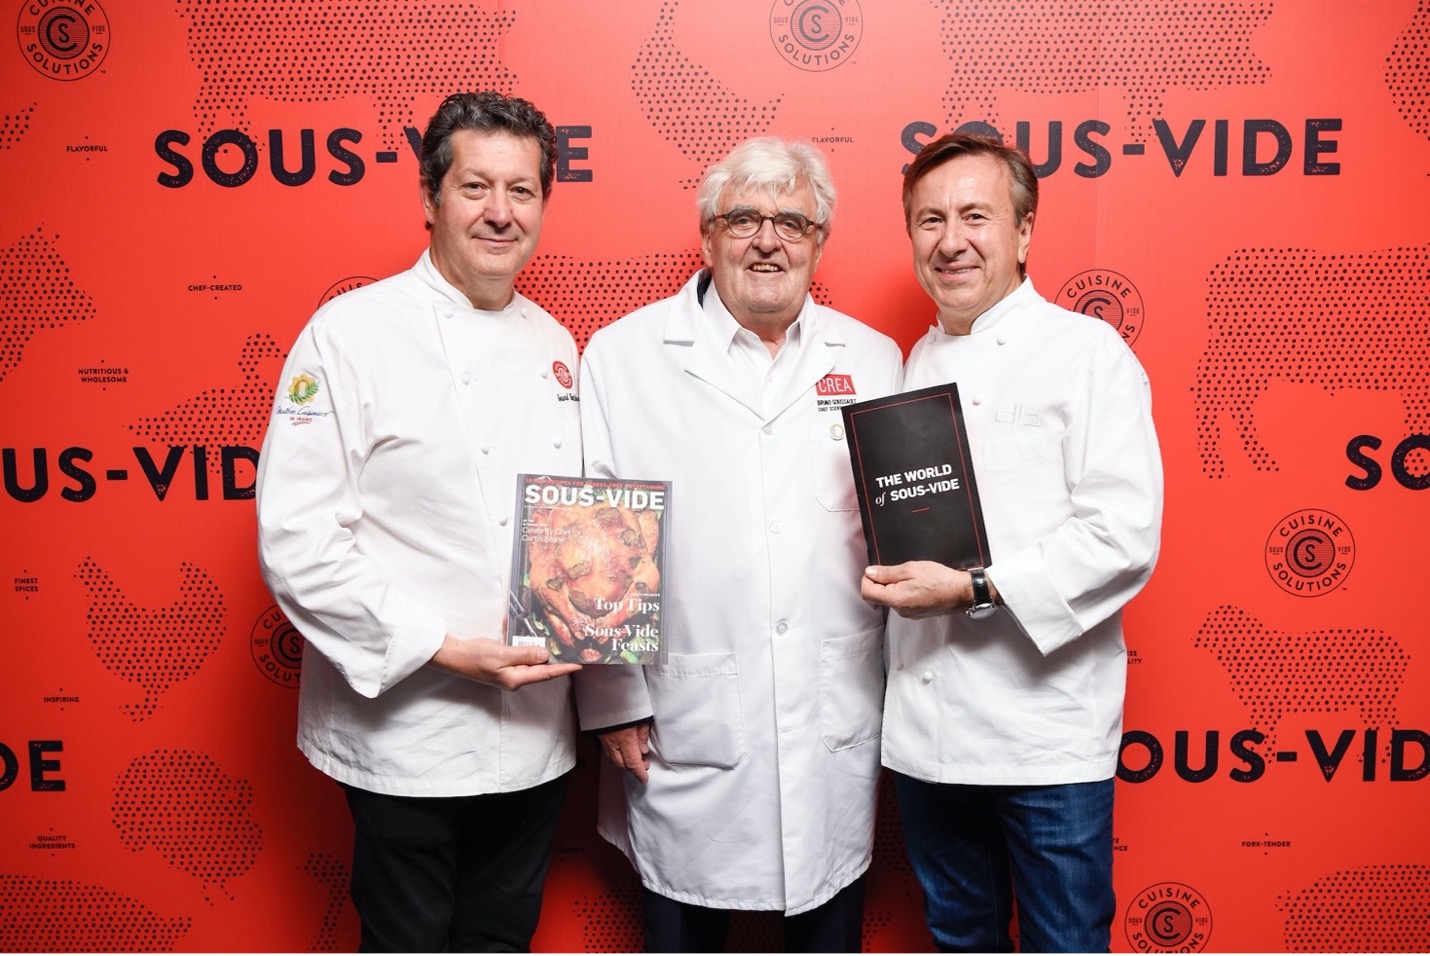 Chef Gerard Bertholon, Dr. Bruno Goussault, Chef Daniel Boulud